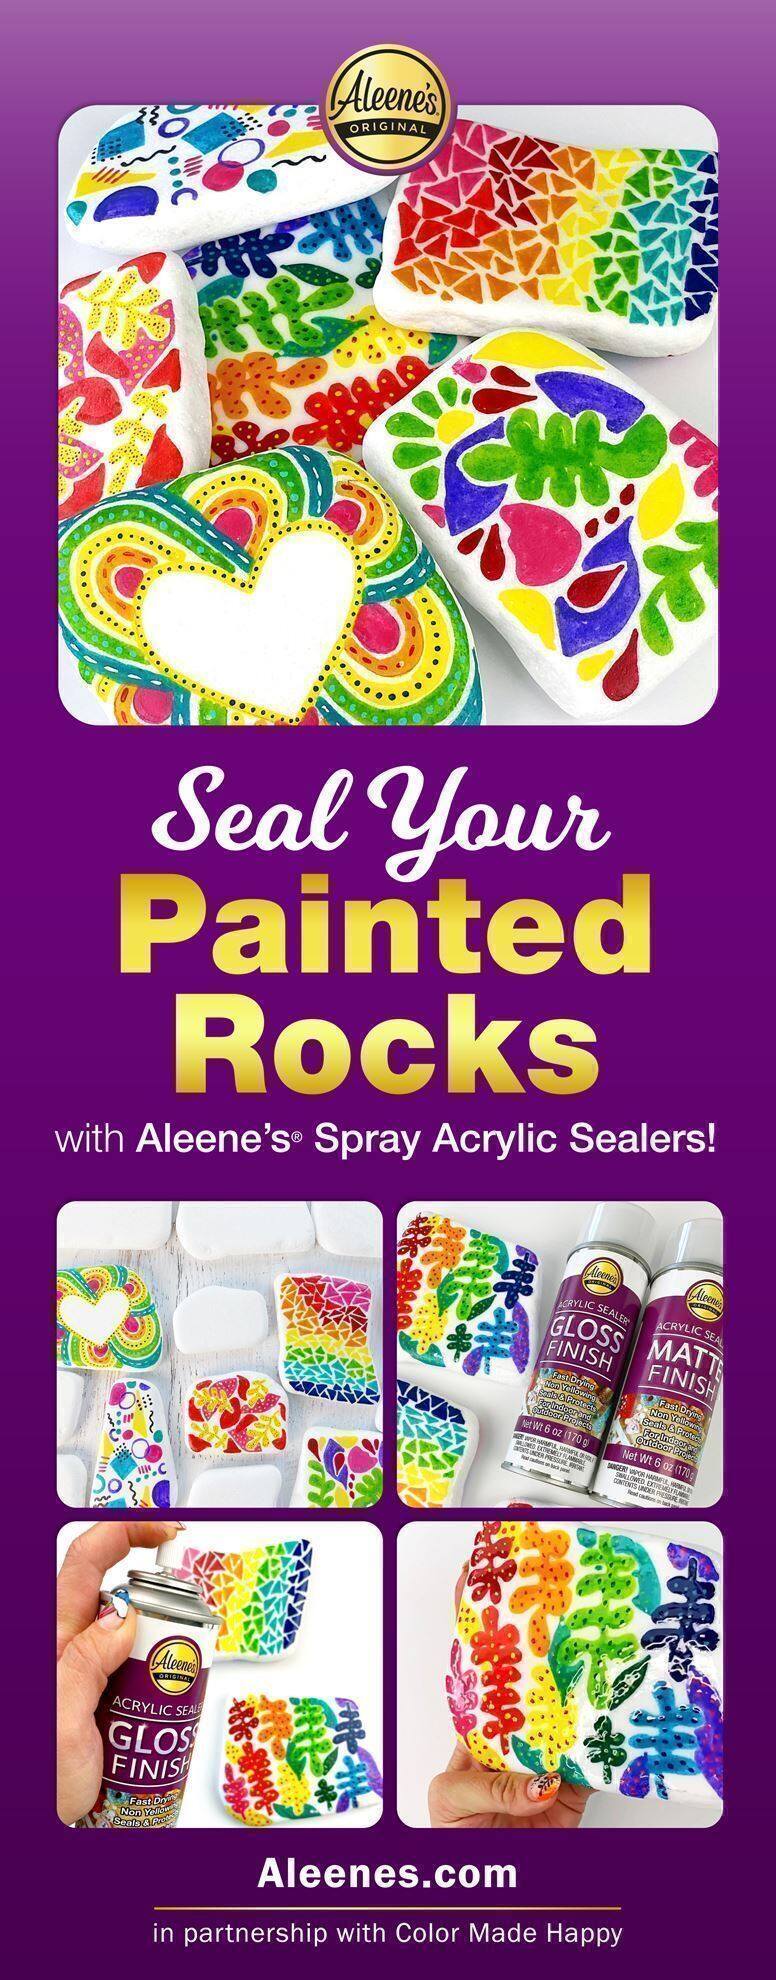 Aleene's 26412 Spray Gloss Finish, 6 Oz Acrylic Sealer, Original Version 6  OZ Clear - Gloss